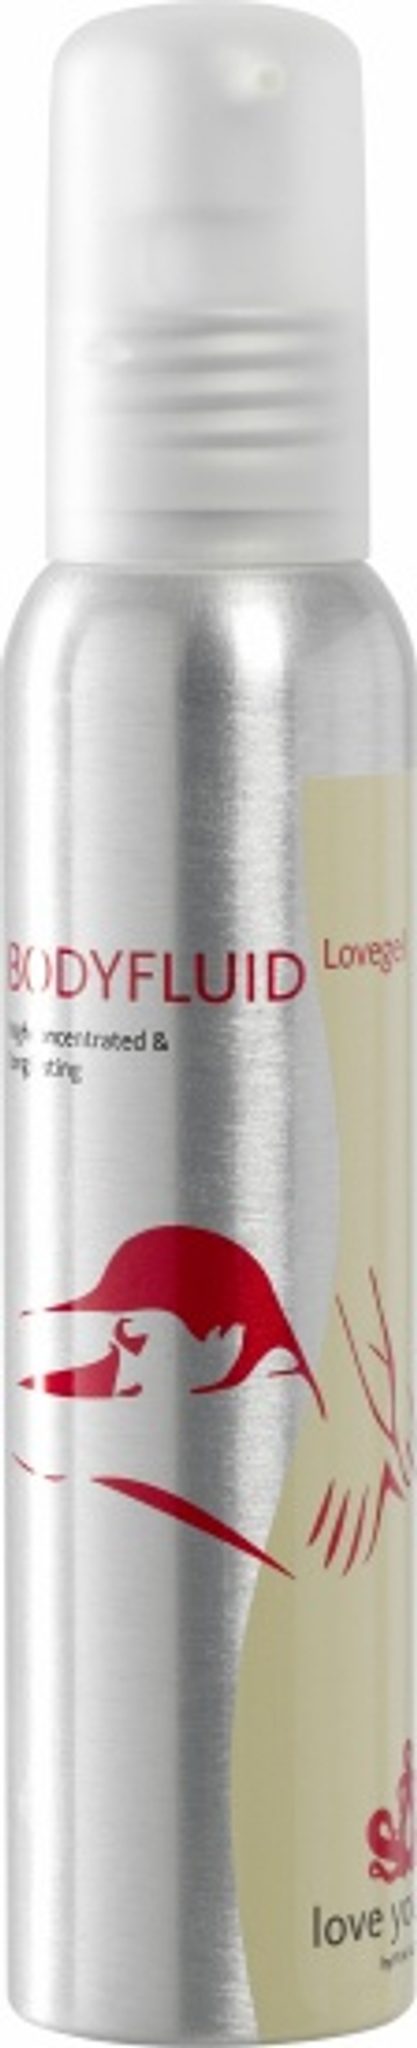 Lubrikační gel Bodyfluid 100 ml